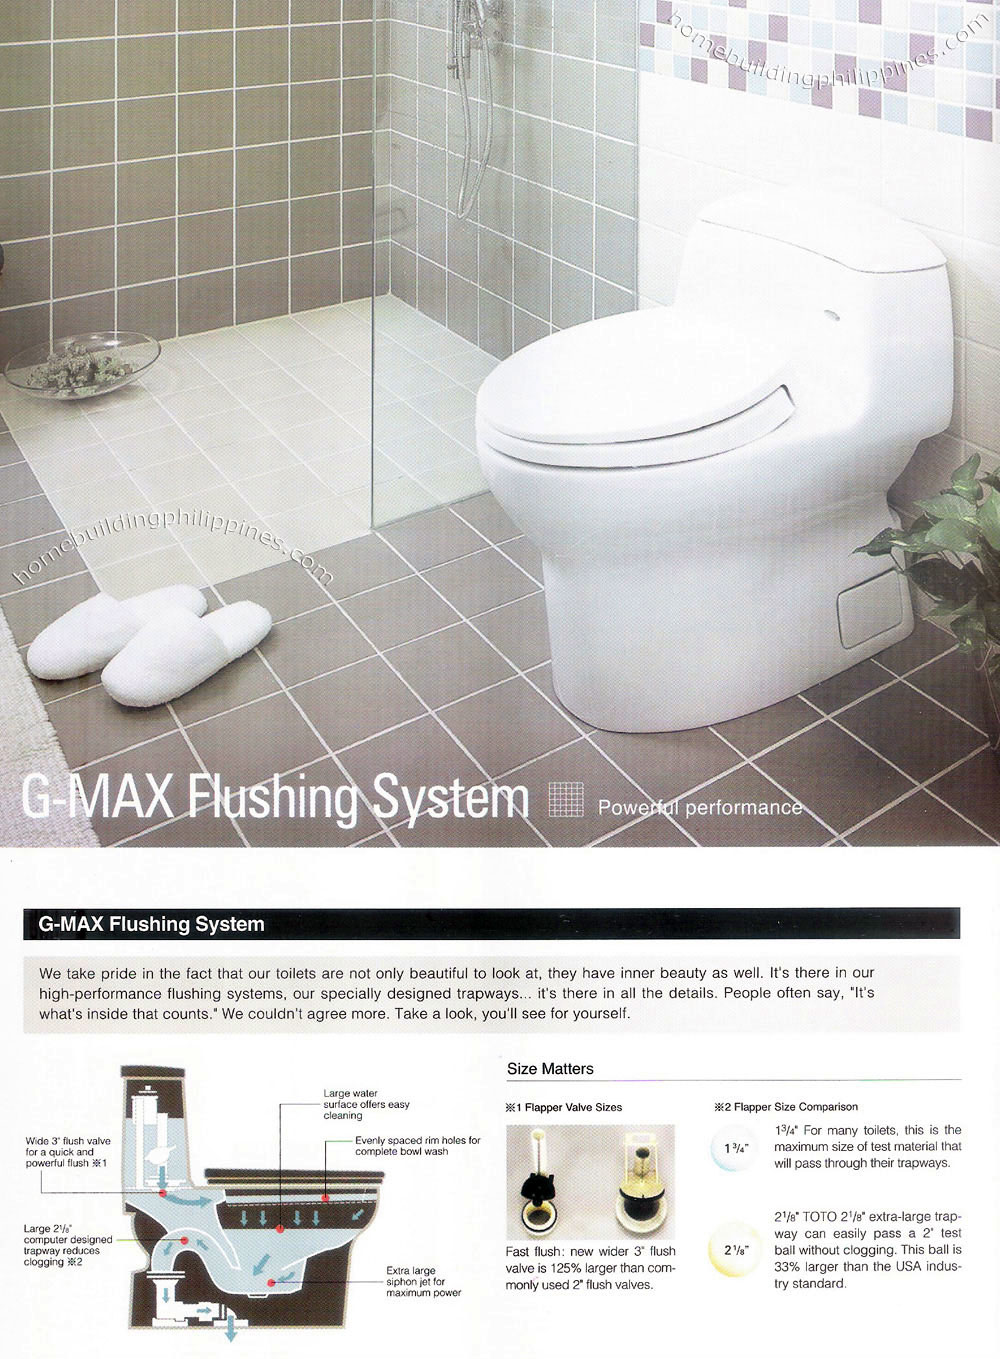 G-Max Flushing System